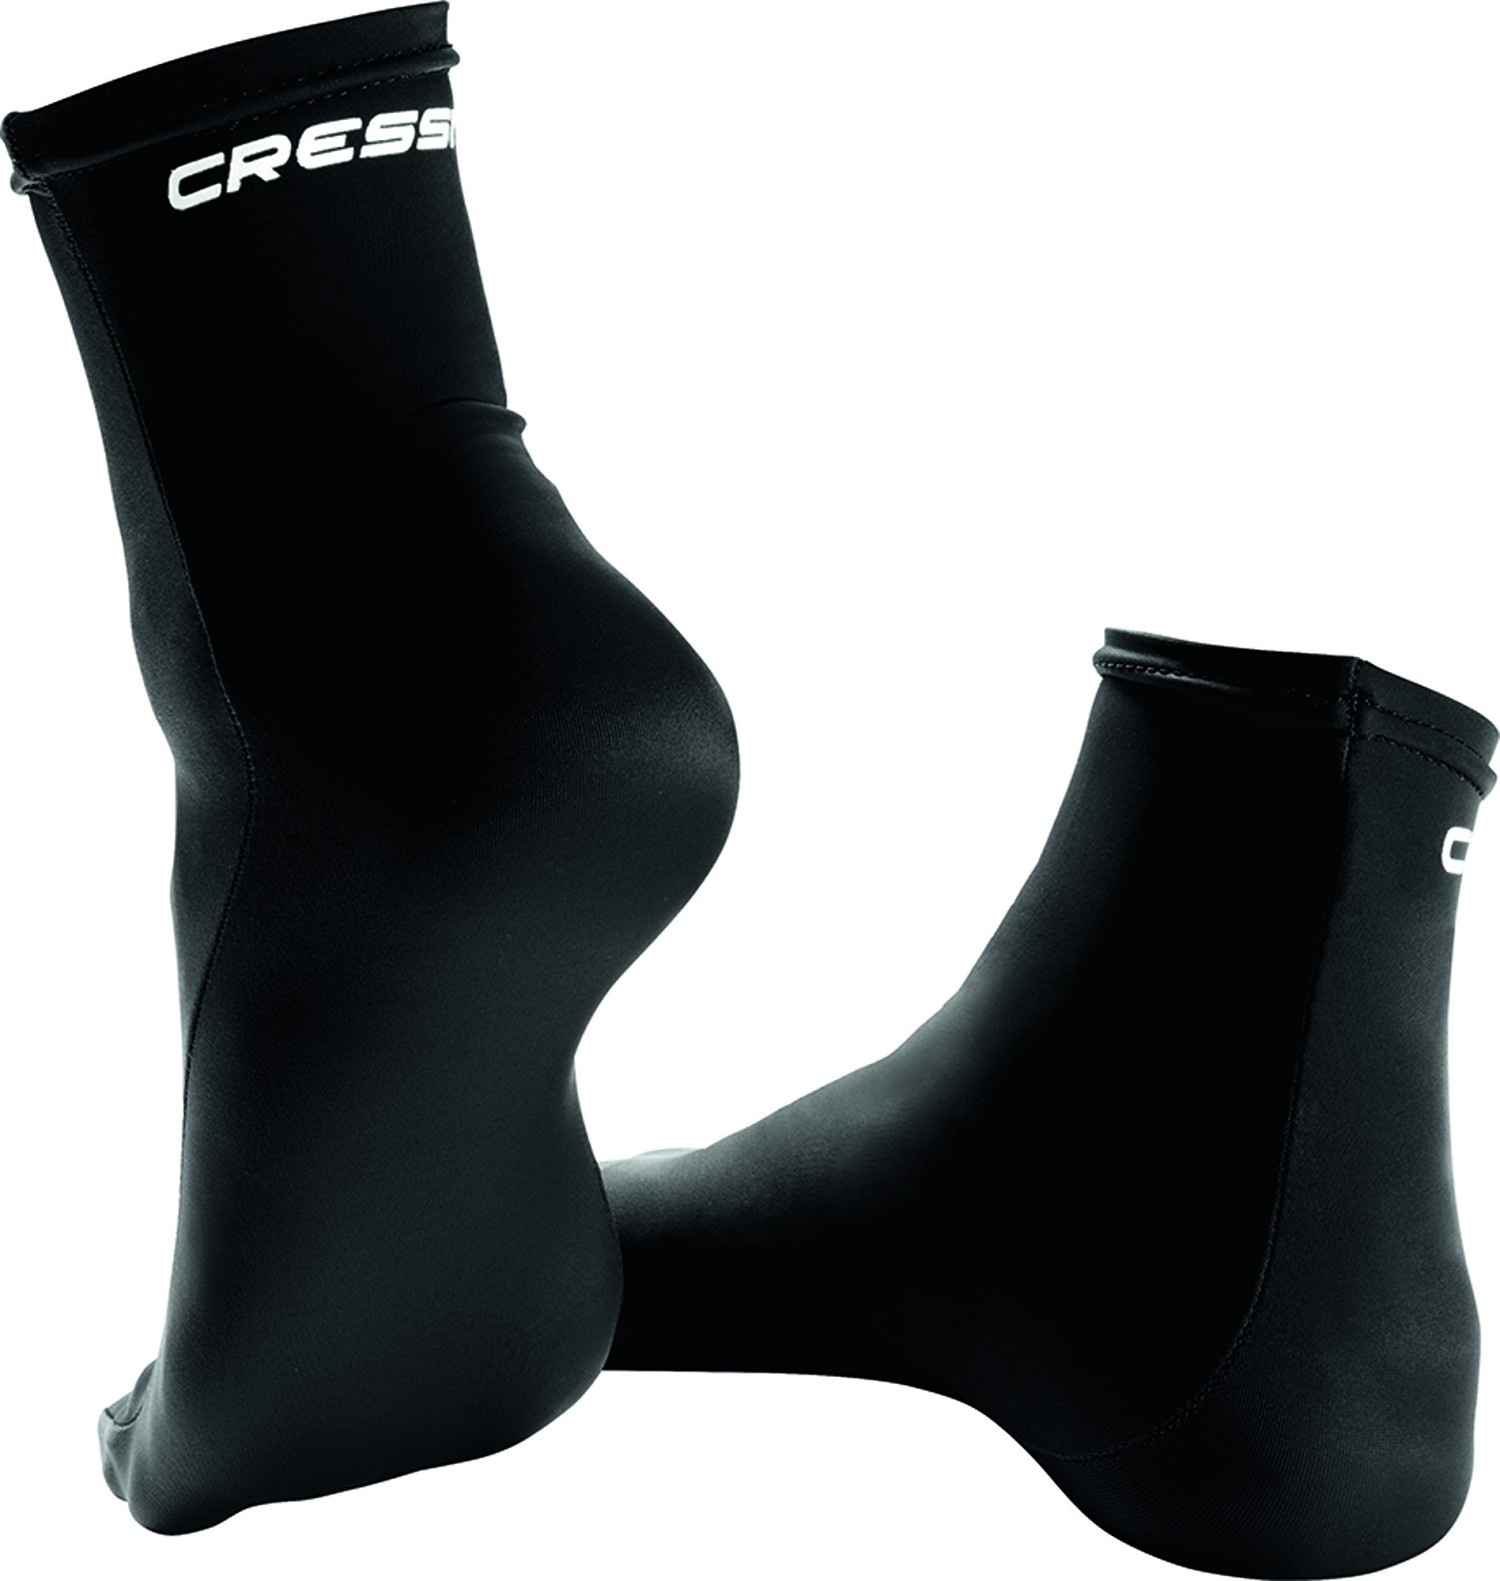 Cressi Fins socks